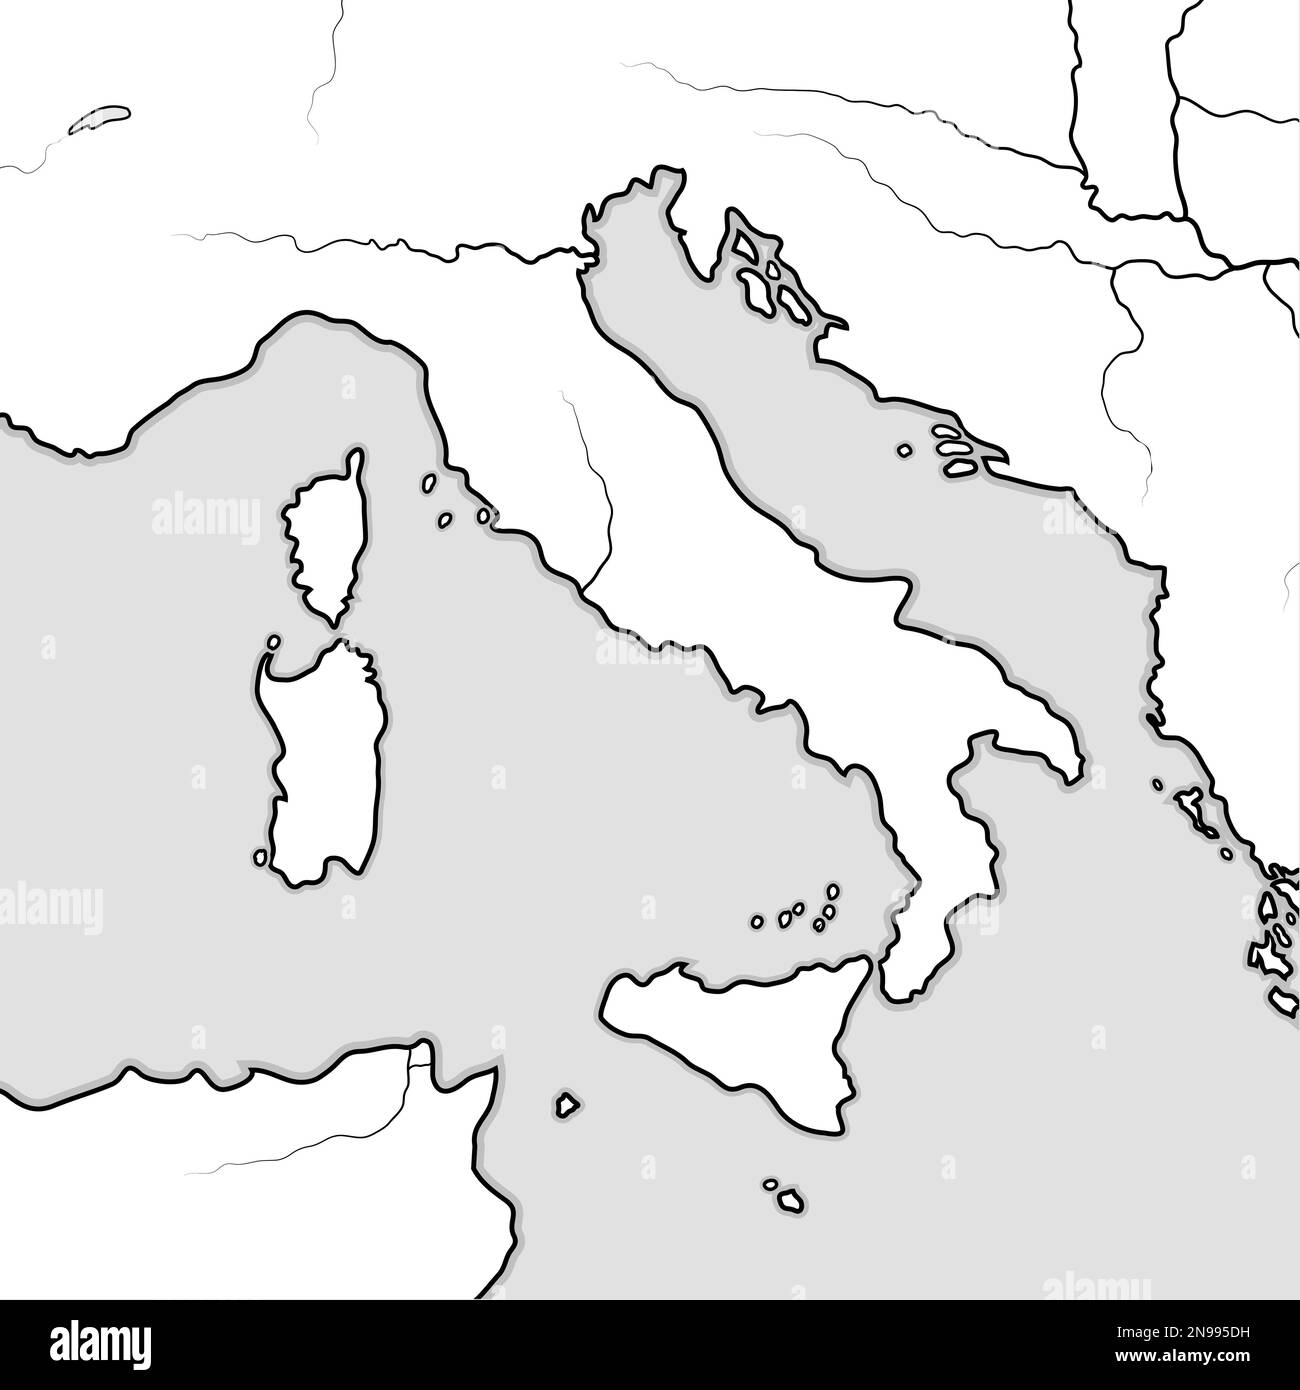 Karte der ITALIENISCHEN Länder: Italien, Toskana, Lombardei, Sizilien, Ligurien, Umbrien, Kampanien, Neapolitanien, Die Apenninen, Die Italienische Halbinsel, Adria & Stockfoto